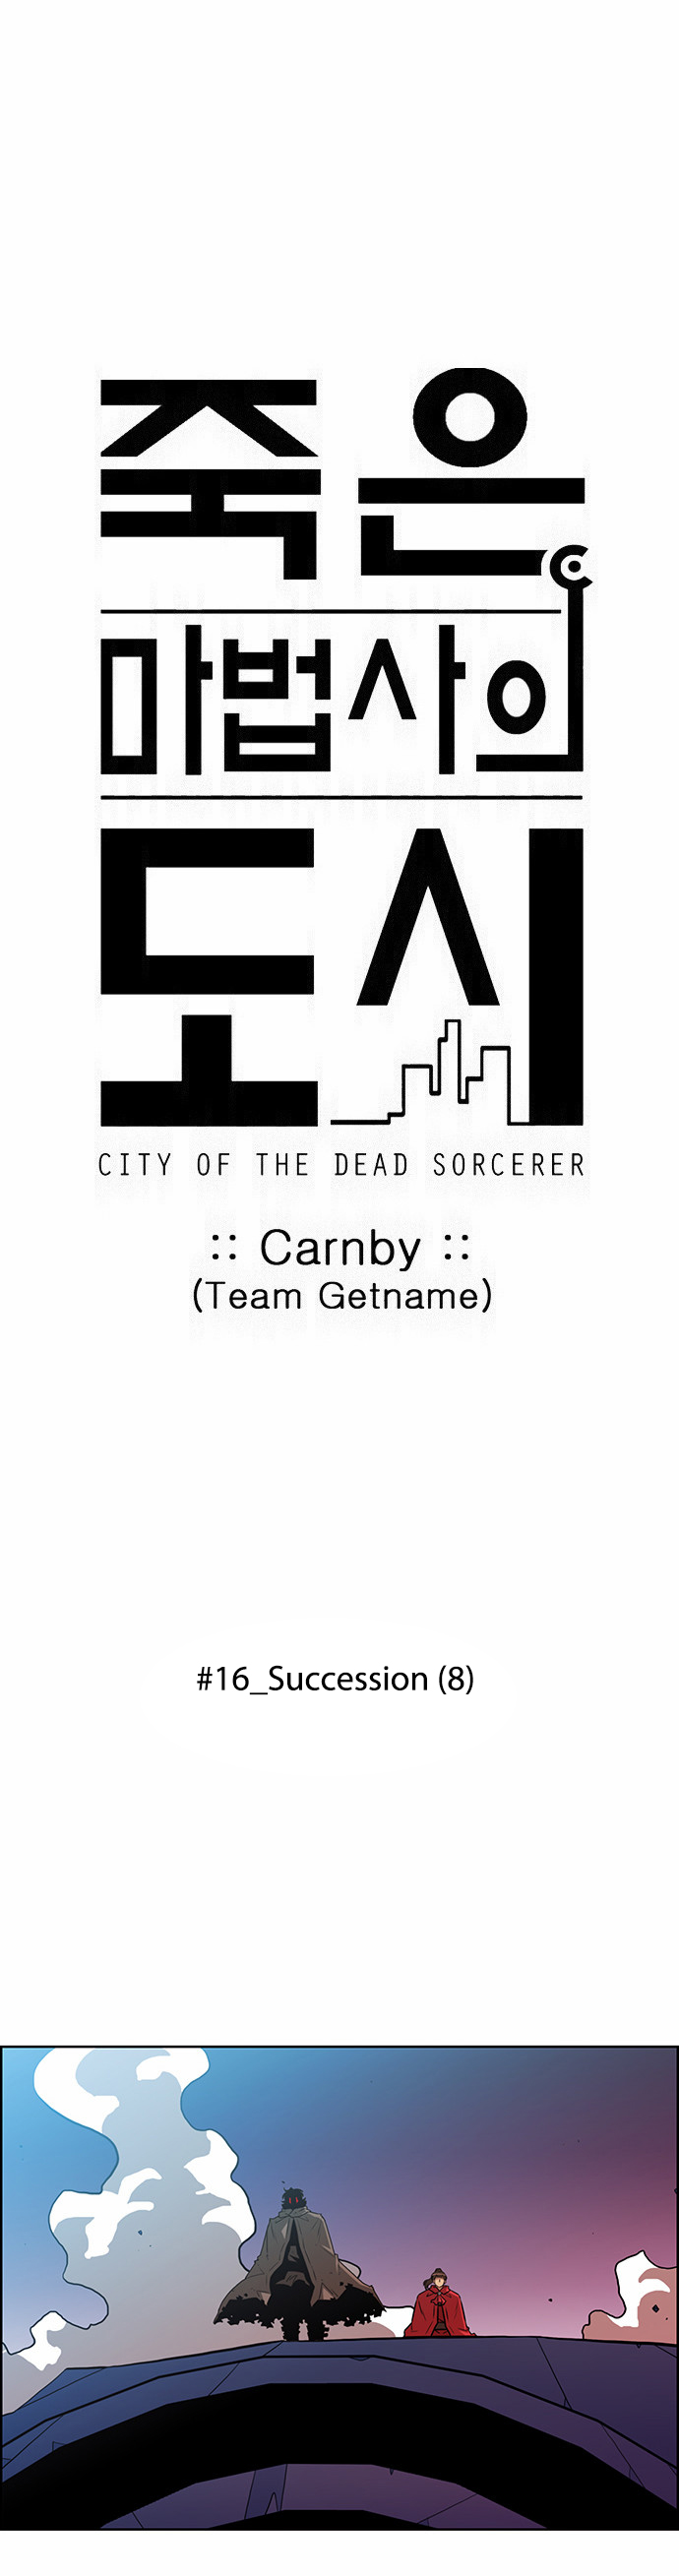 City Of Dead Sorcerer - Page 2